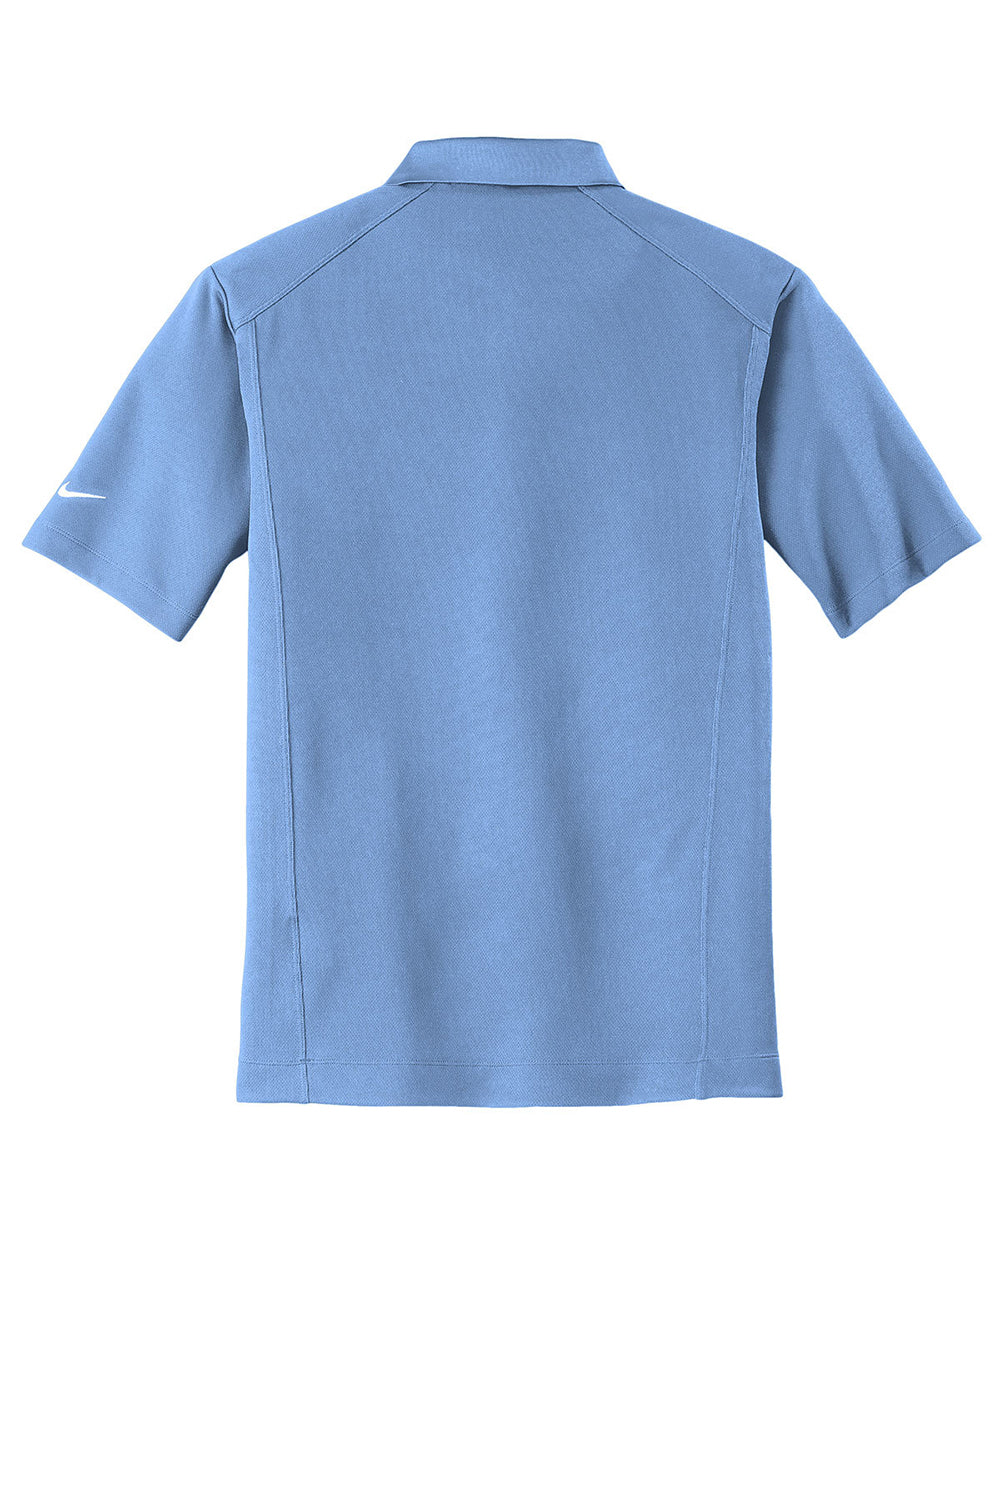 Nike 267020 Mens Classic Dri-Fit Moisture Wicking Short Sleeve Polo Shirt Light Blue Flat Back